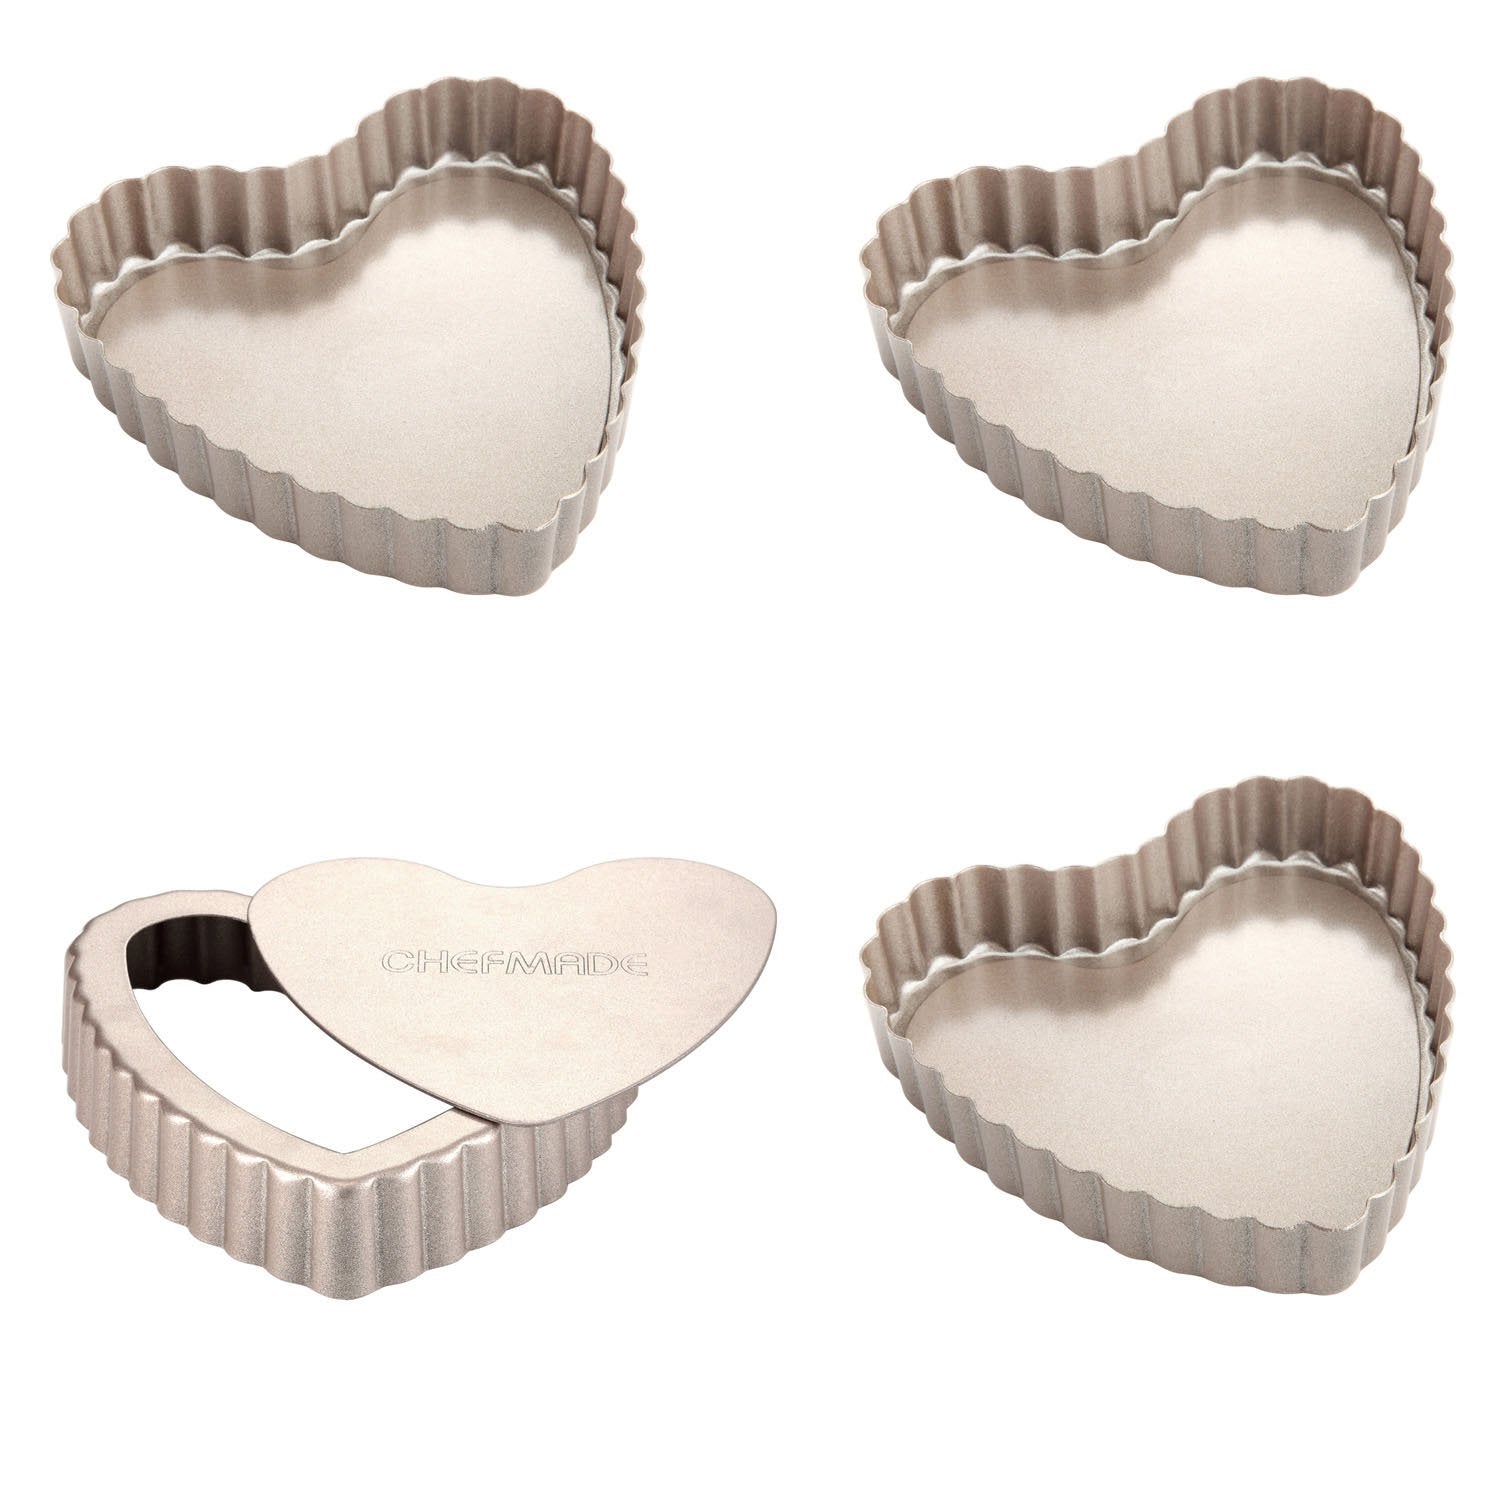 CHEFMADE 4" Non-Stick Heart Tart Pan (WK9025)